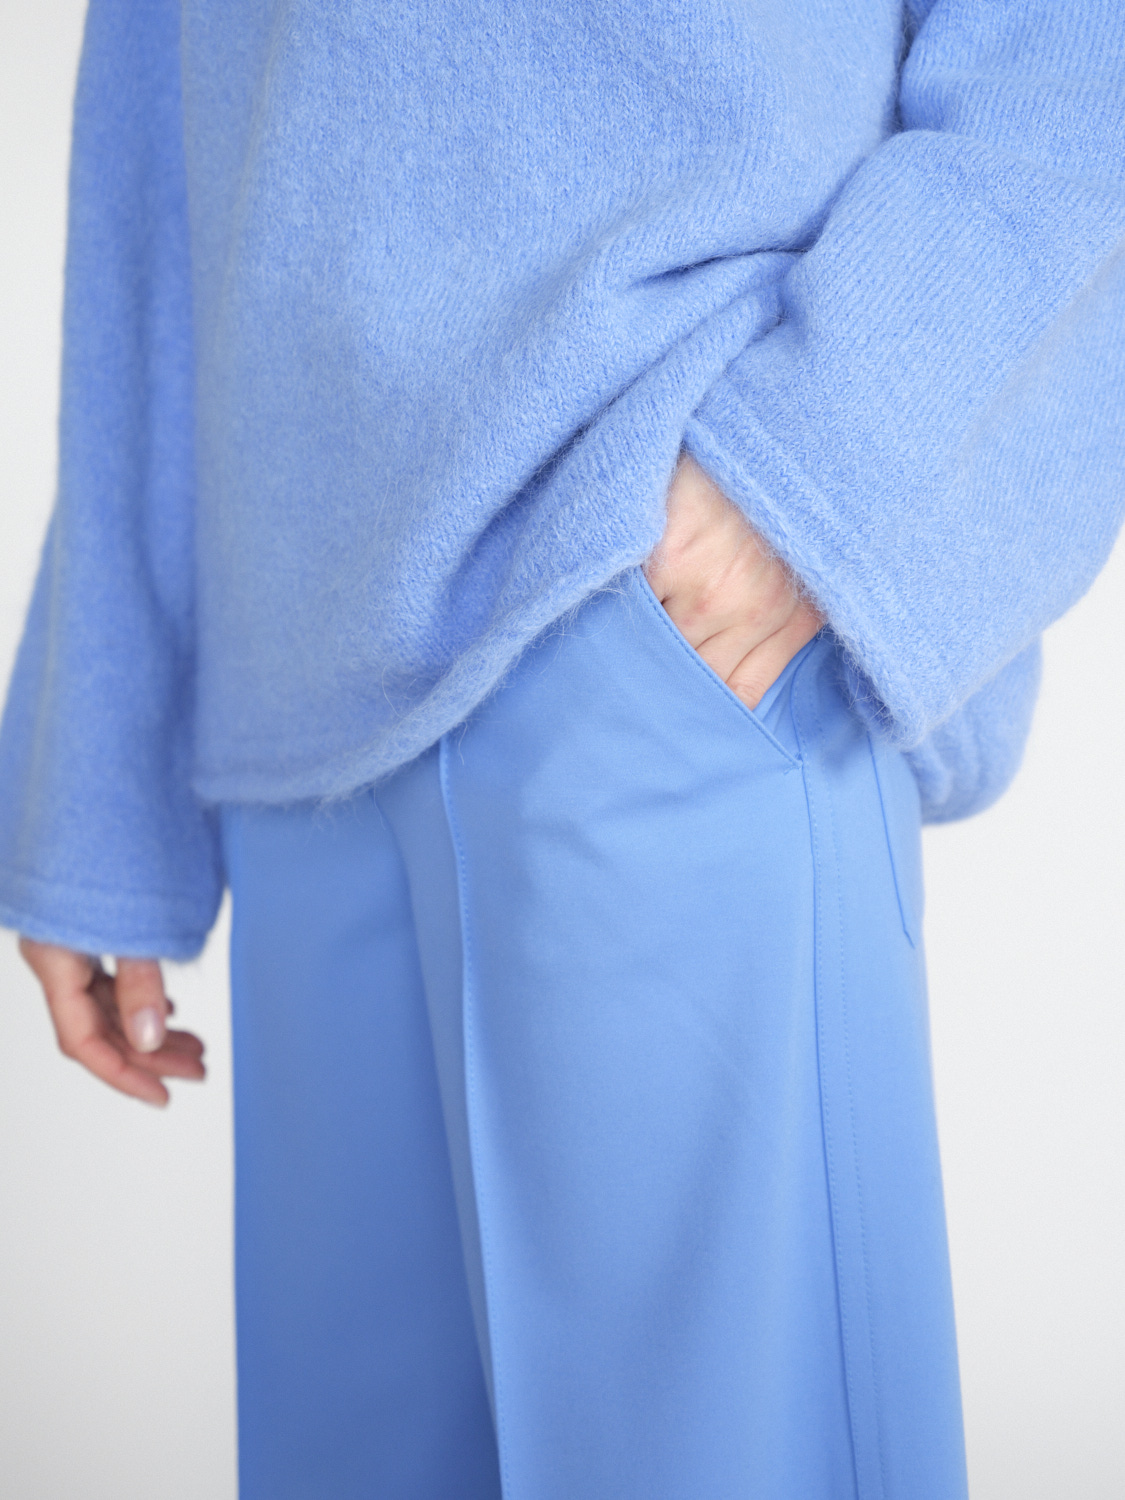 Dorothee Schumacher Cozy Comfort – Oversize Pullover aus Alpaka-Mix  blau S